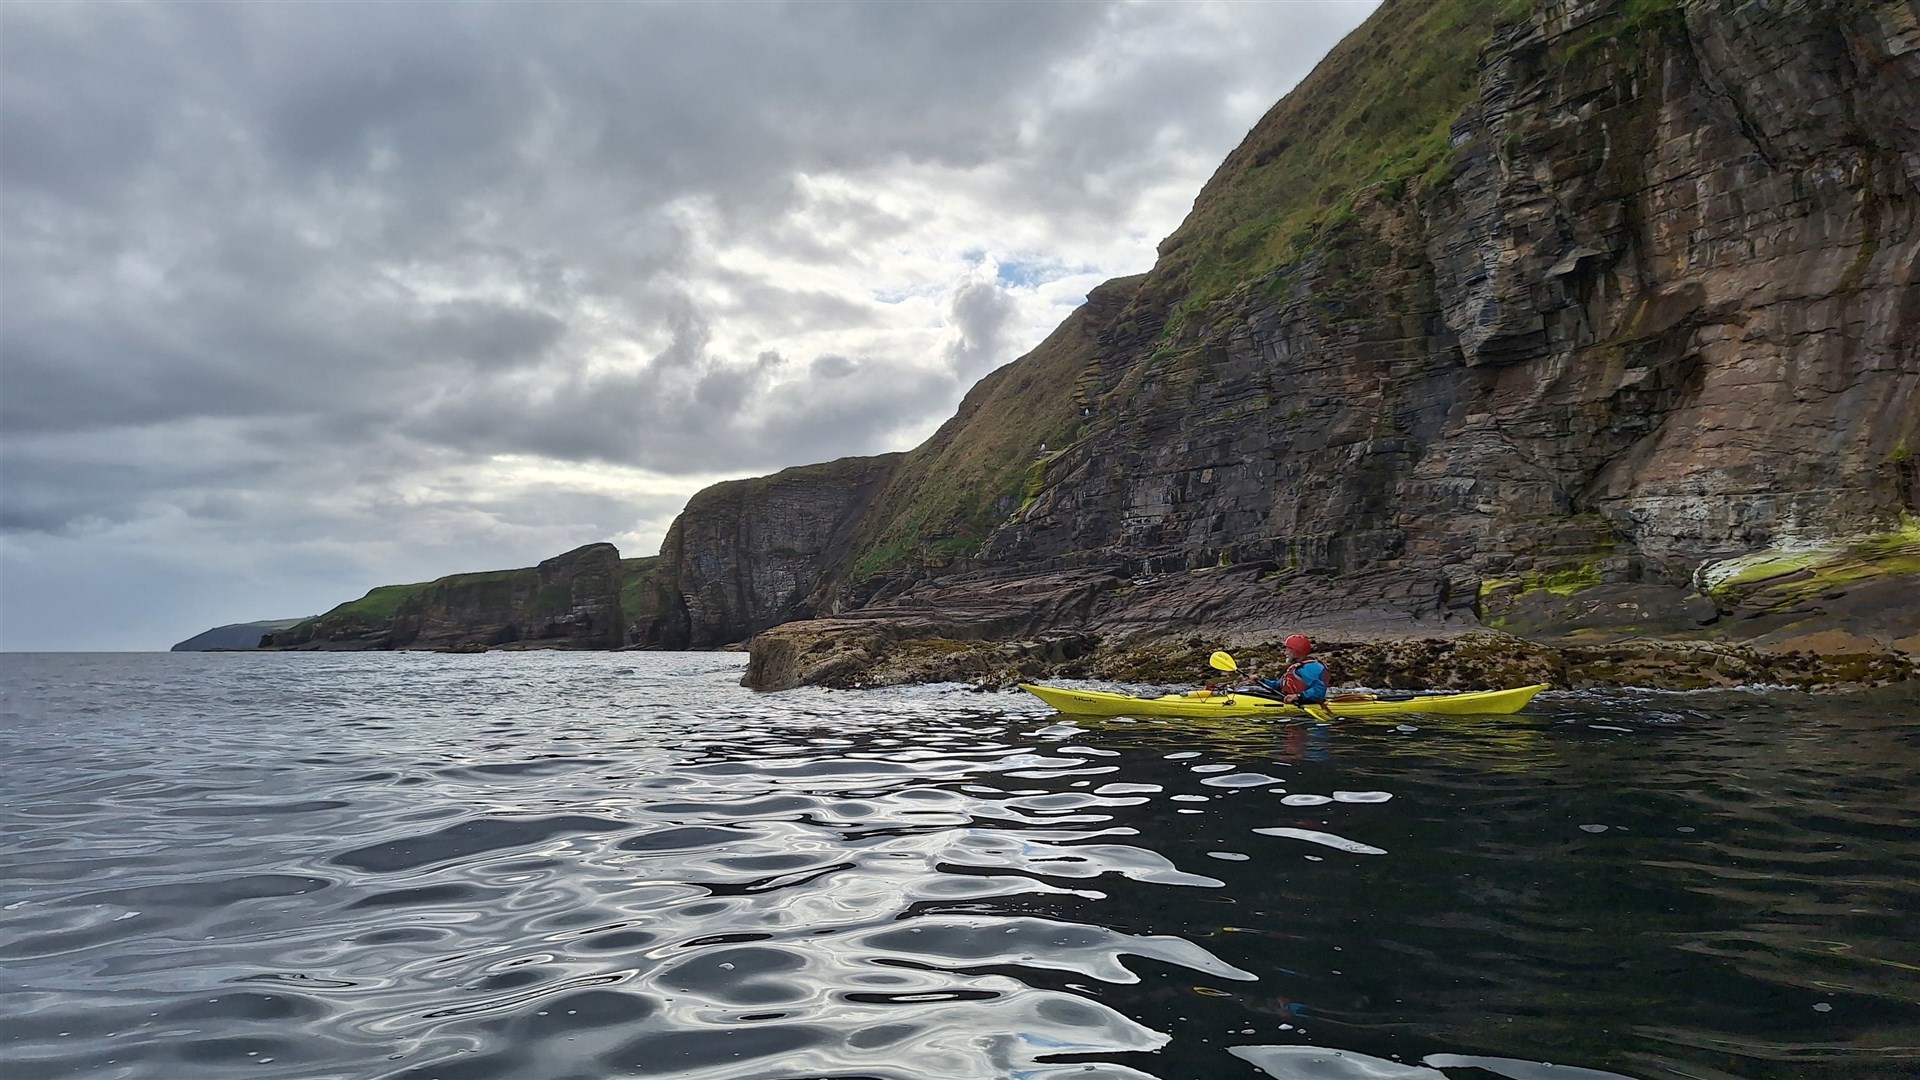 Ben Macgregor enjoys perfect conditions below the Caithness cliffs.